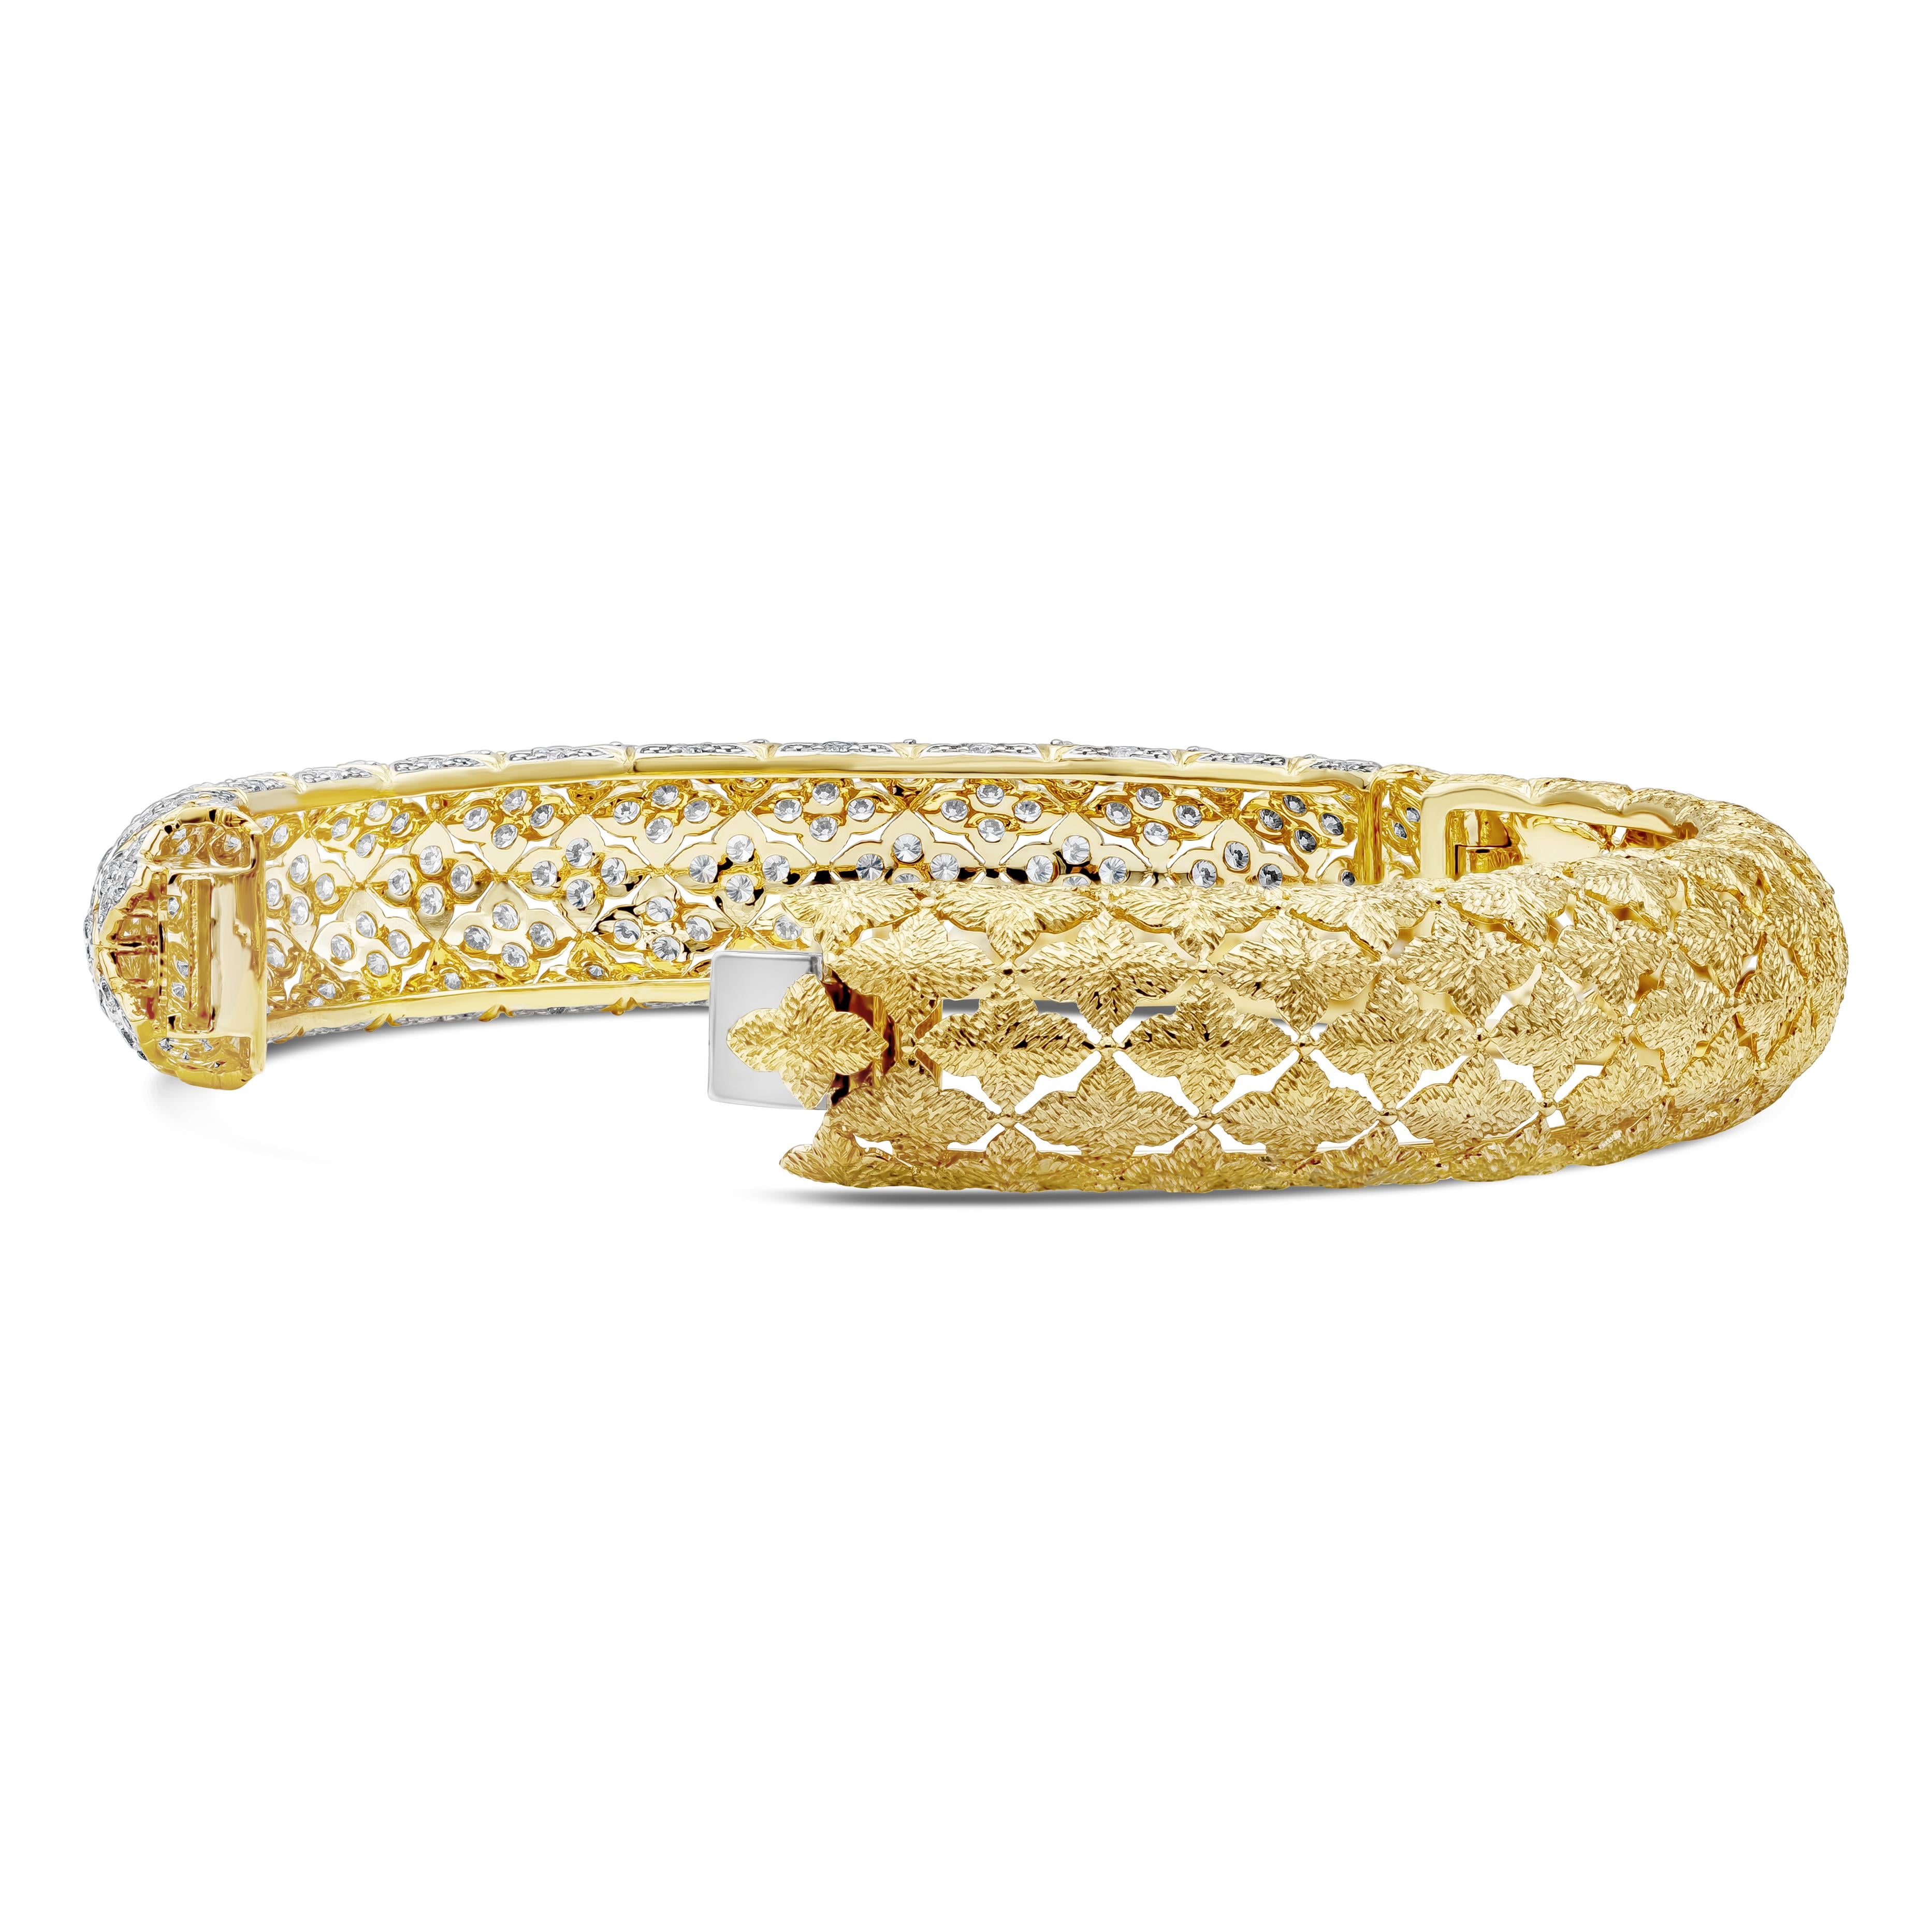 Contemporary 6.64 Carat Total Round Diamond in Floral Design Bangle Fashion Bracelet For Sale